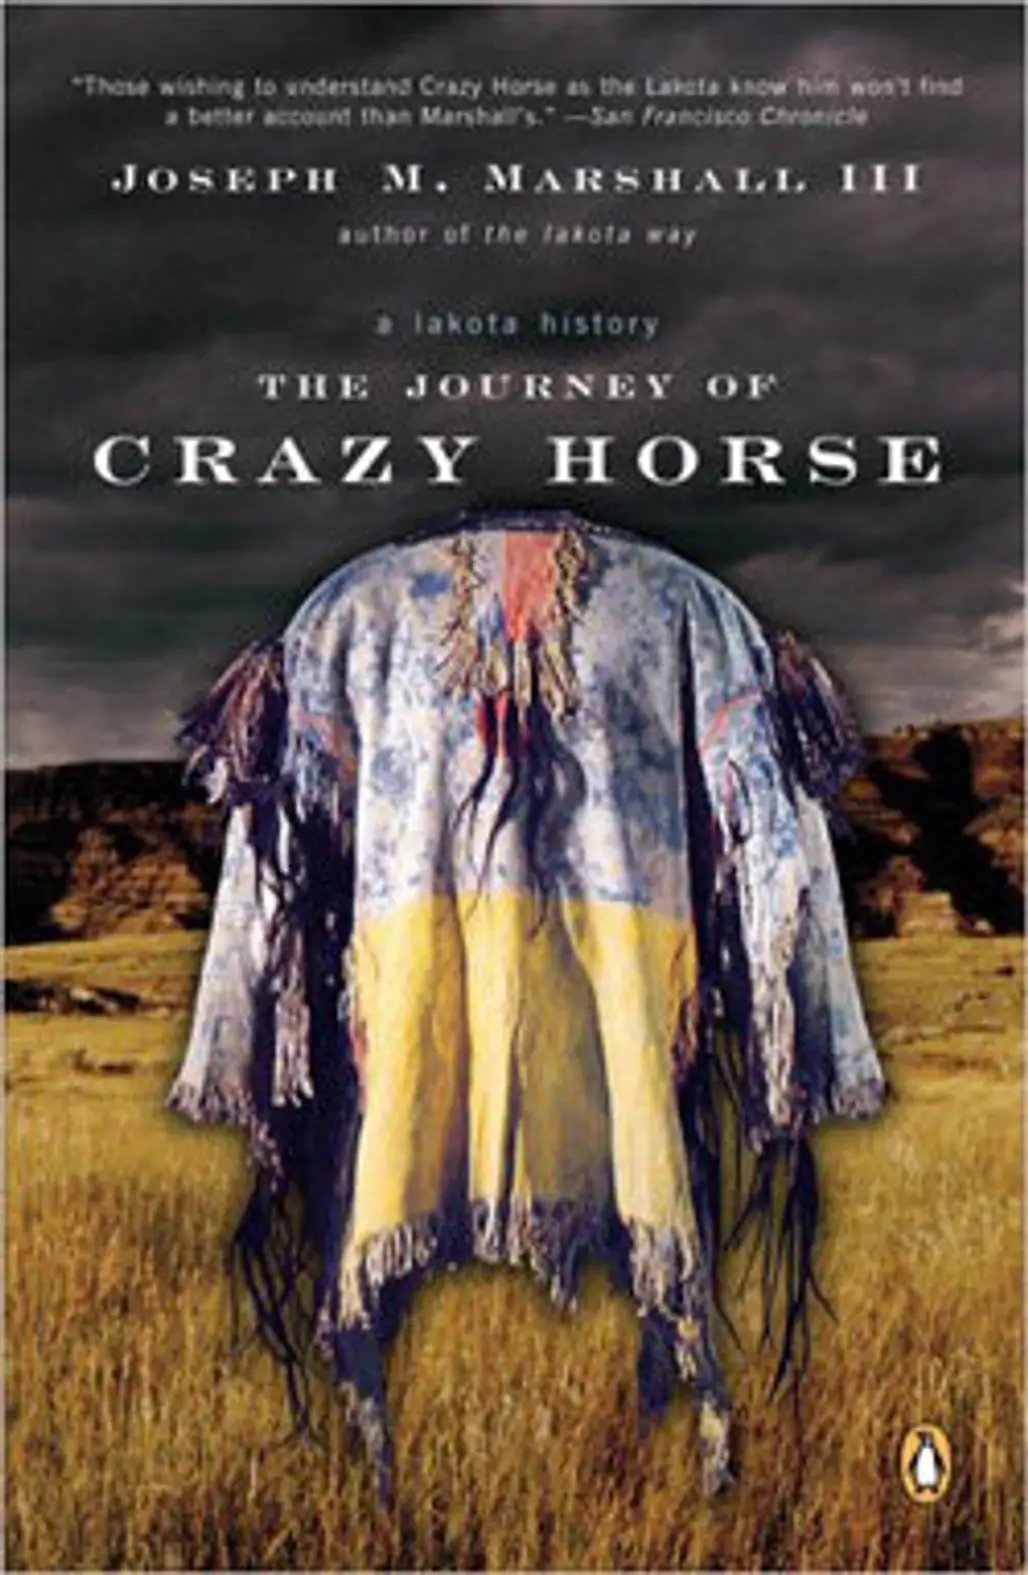 The Journey of Crazy Horse: a Lakota History by Joseph M. Marshall III